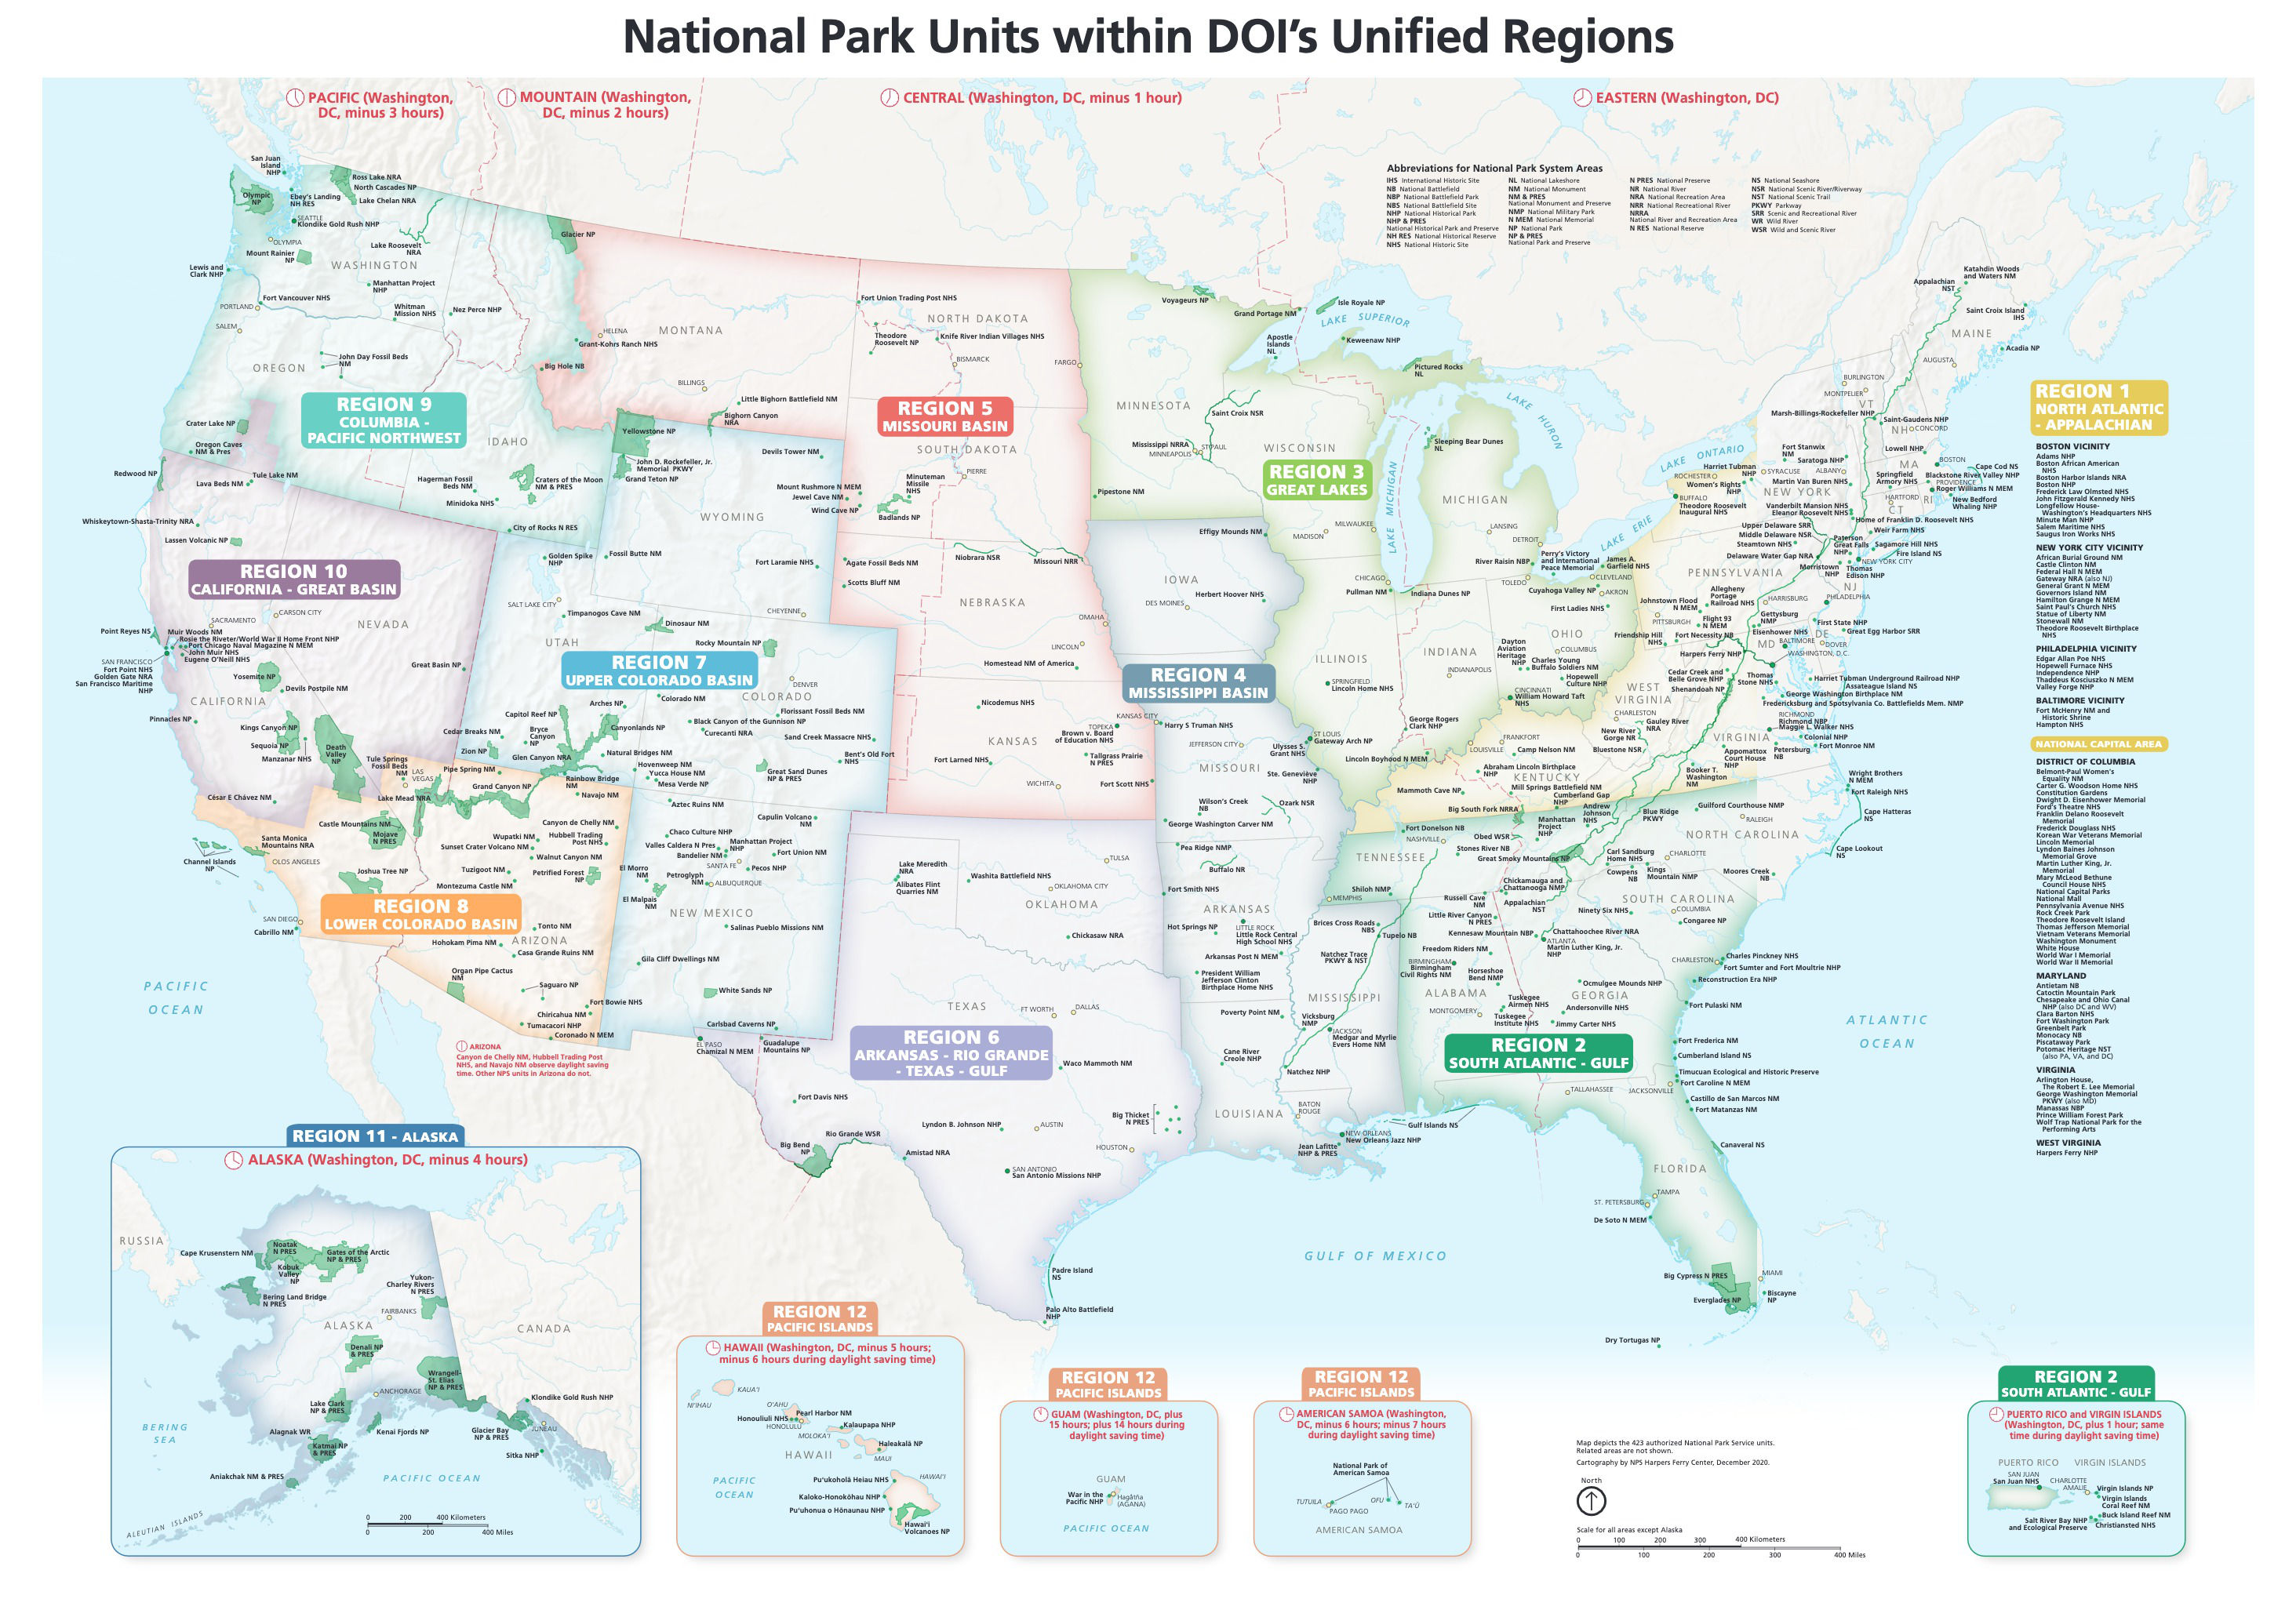 National Park Service Regions